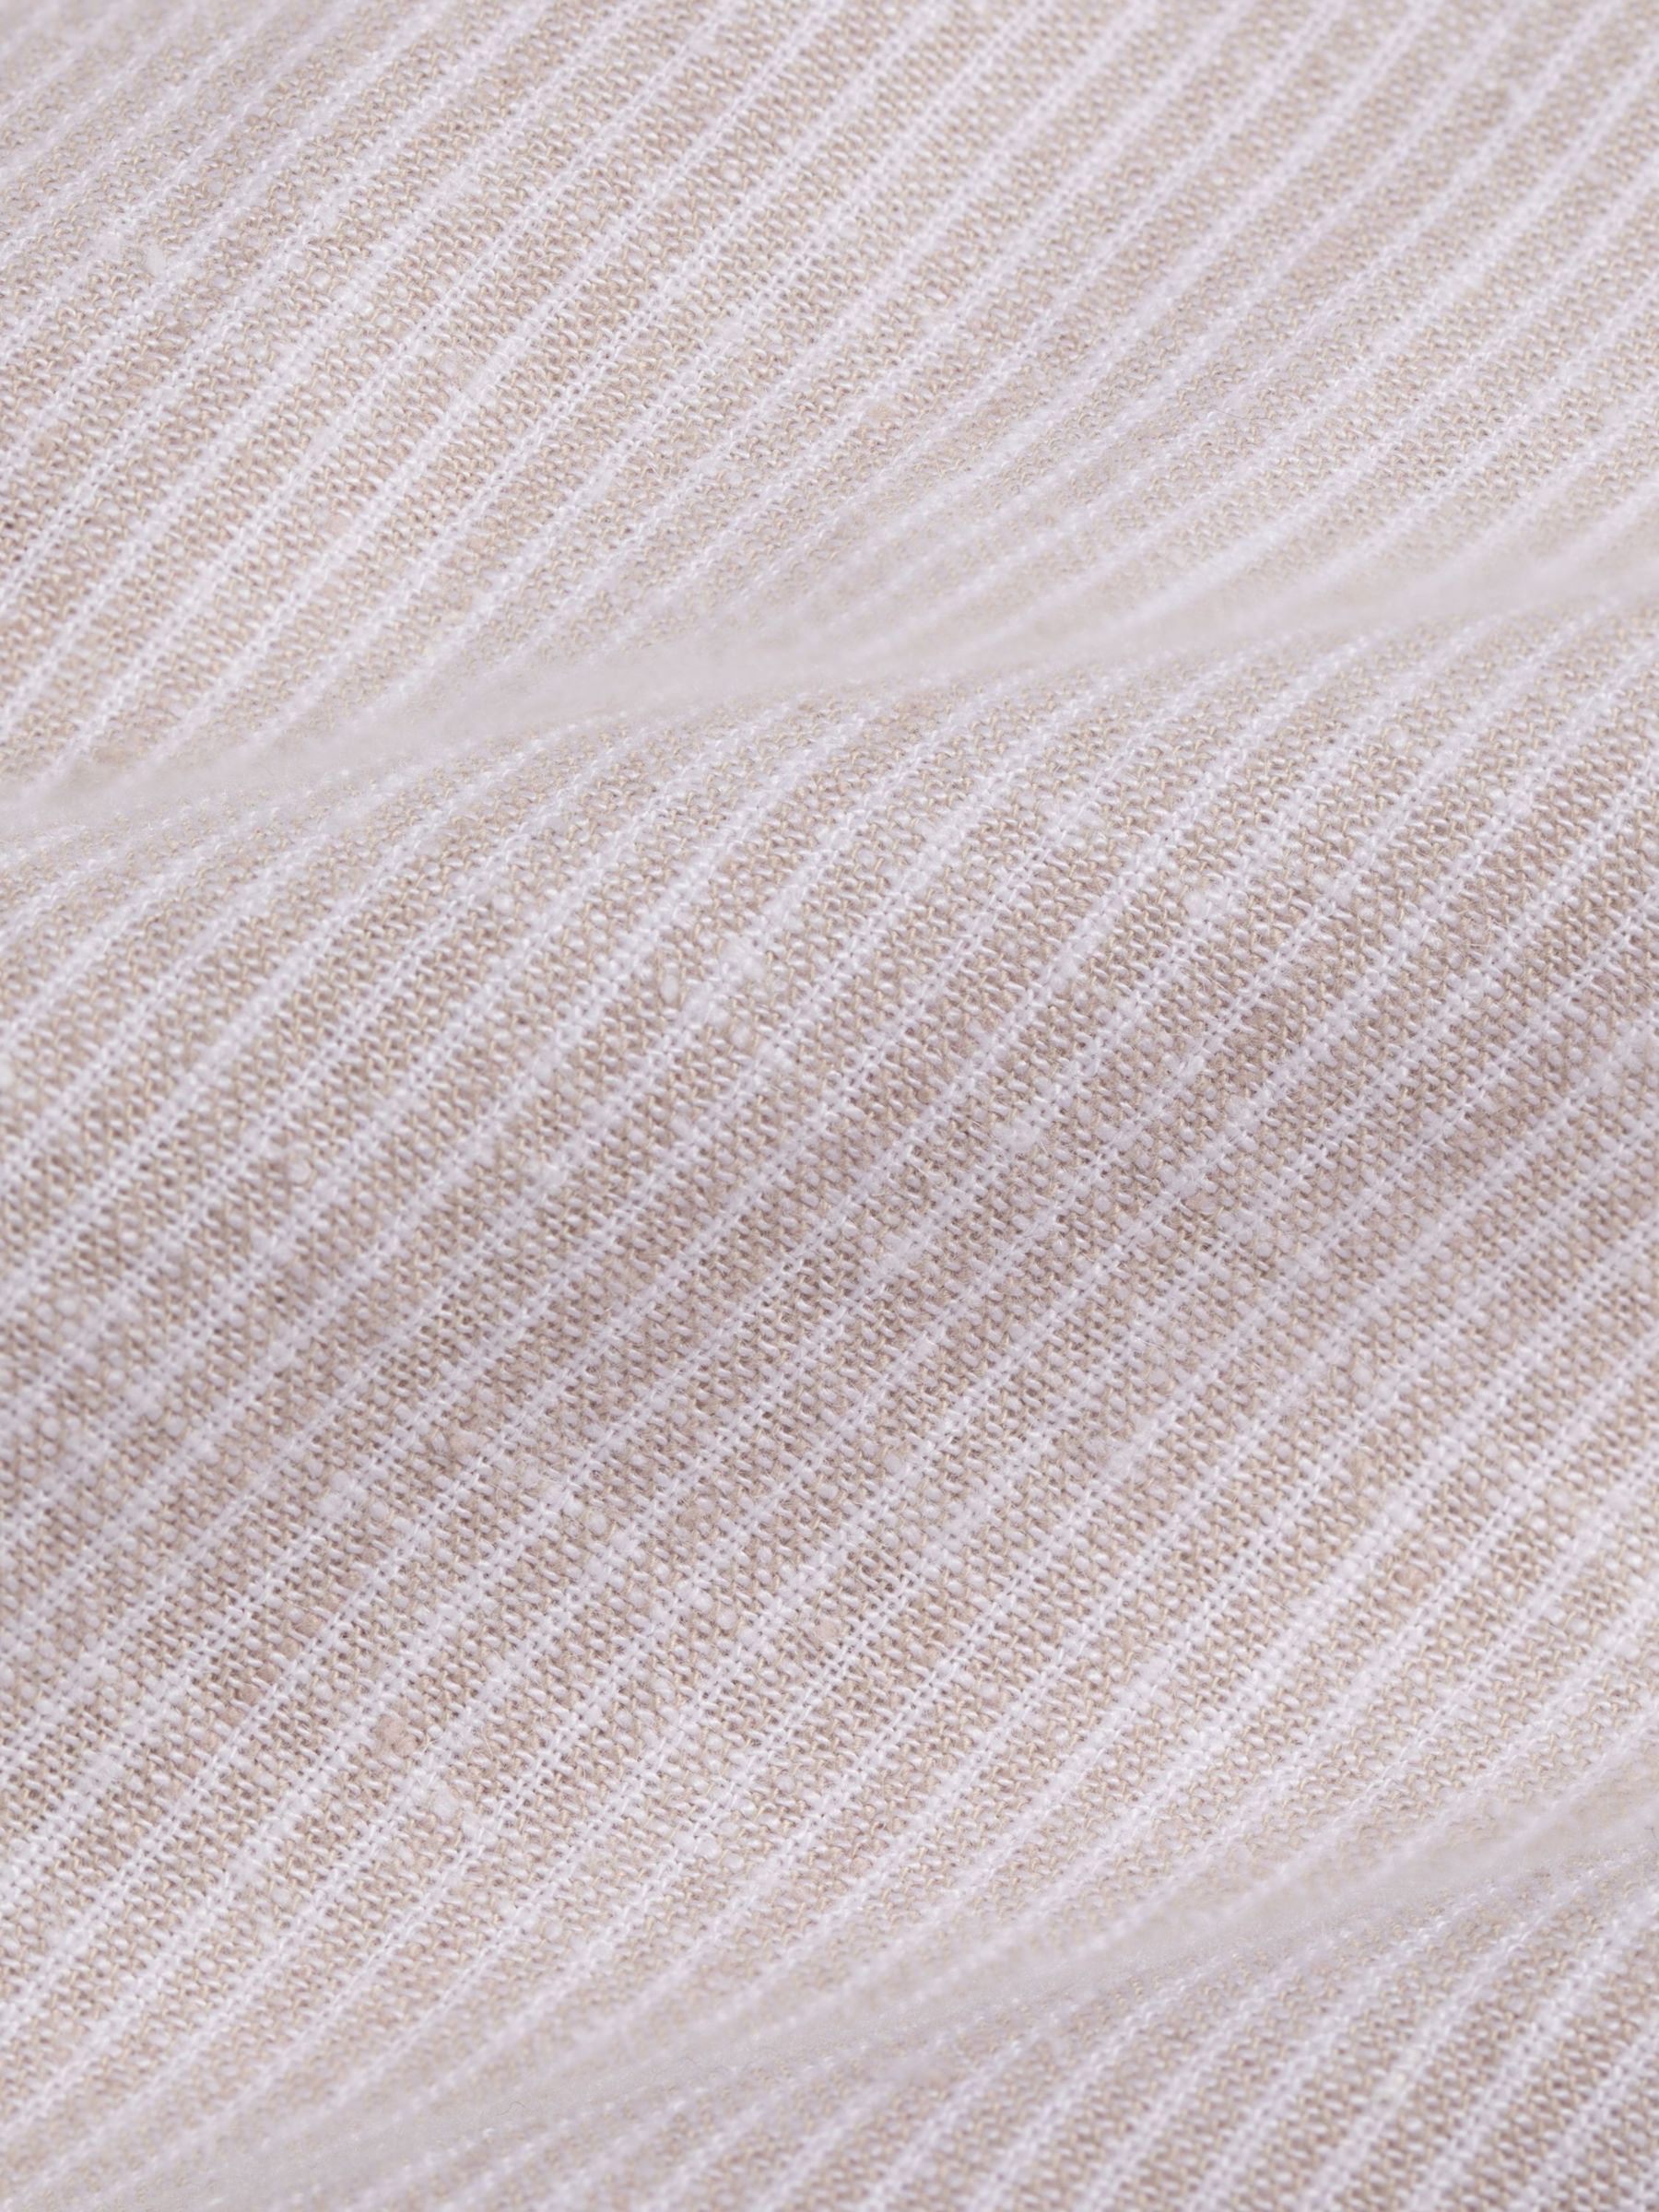 Buy Chelsea Peers Linen Blend Micro Stripe Shirt, Beige Online at johnlewis.com